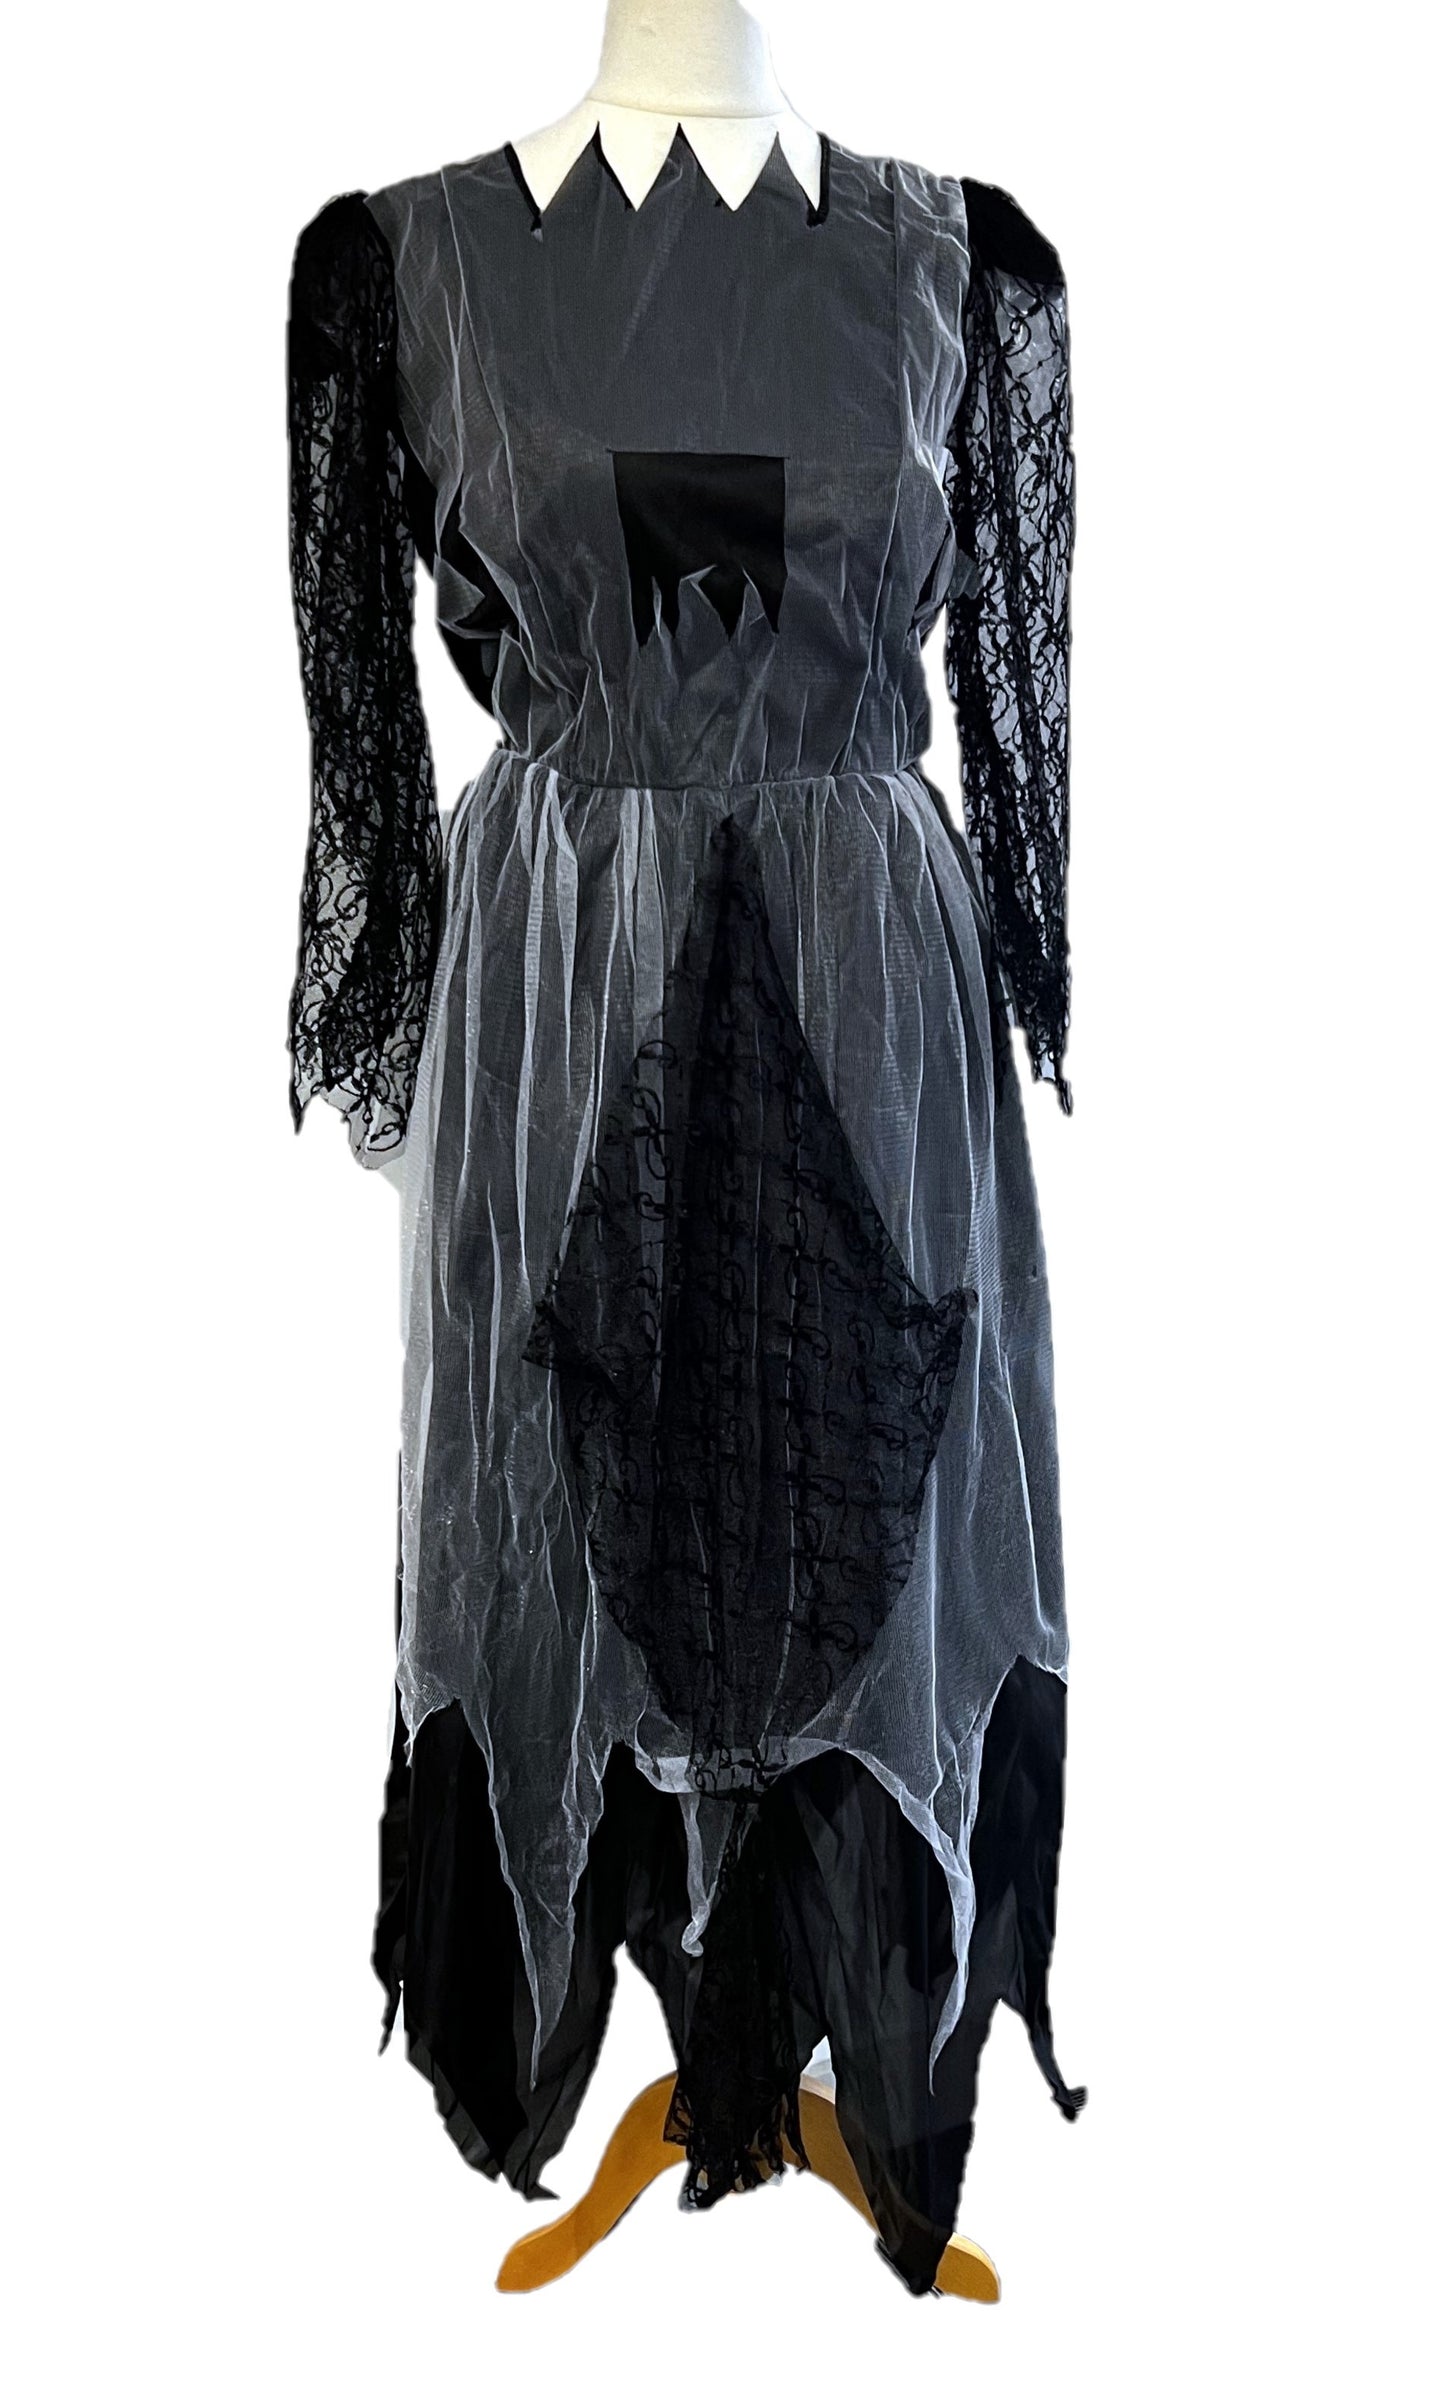 Ladies Halloween Corpse Bride Fancy Dress Costume